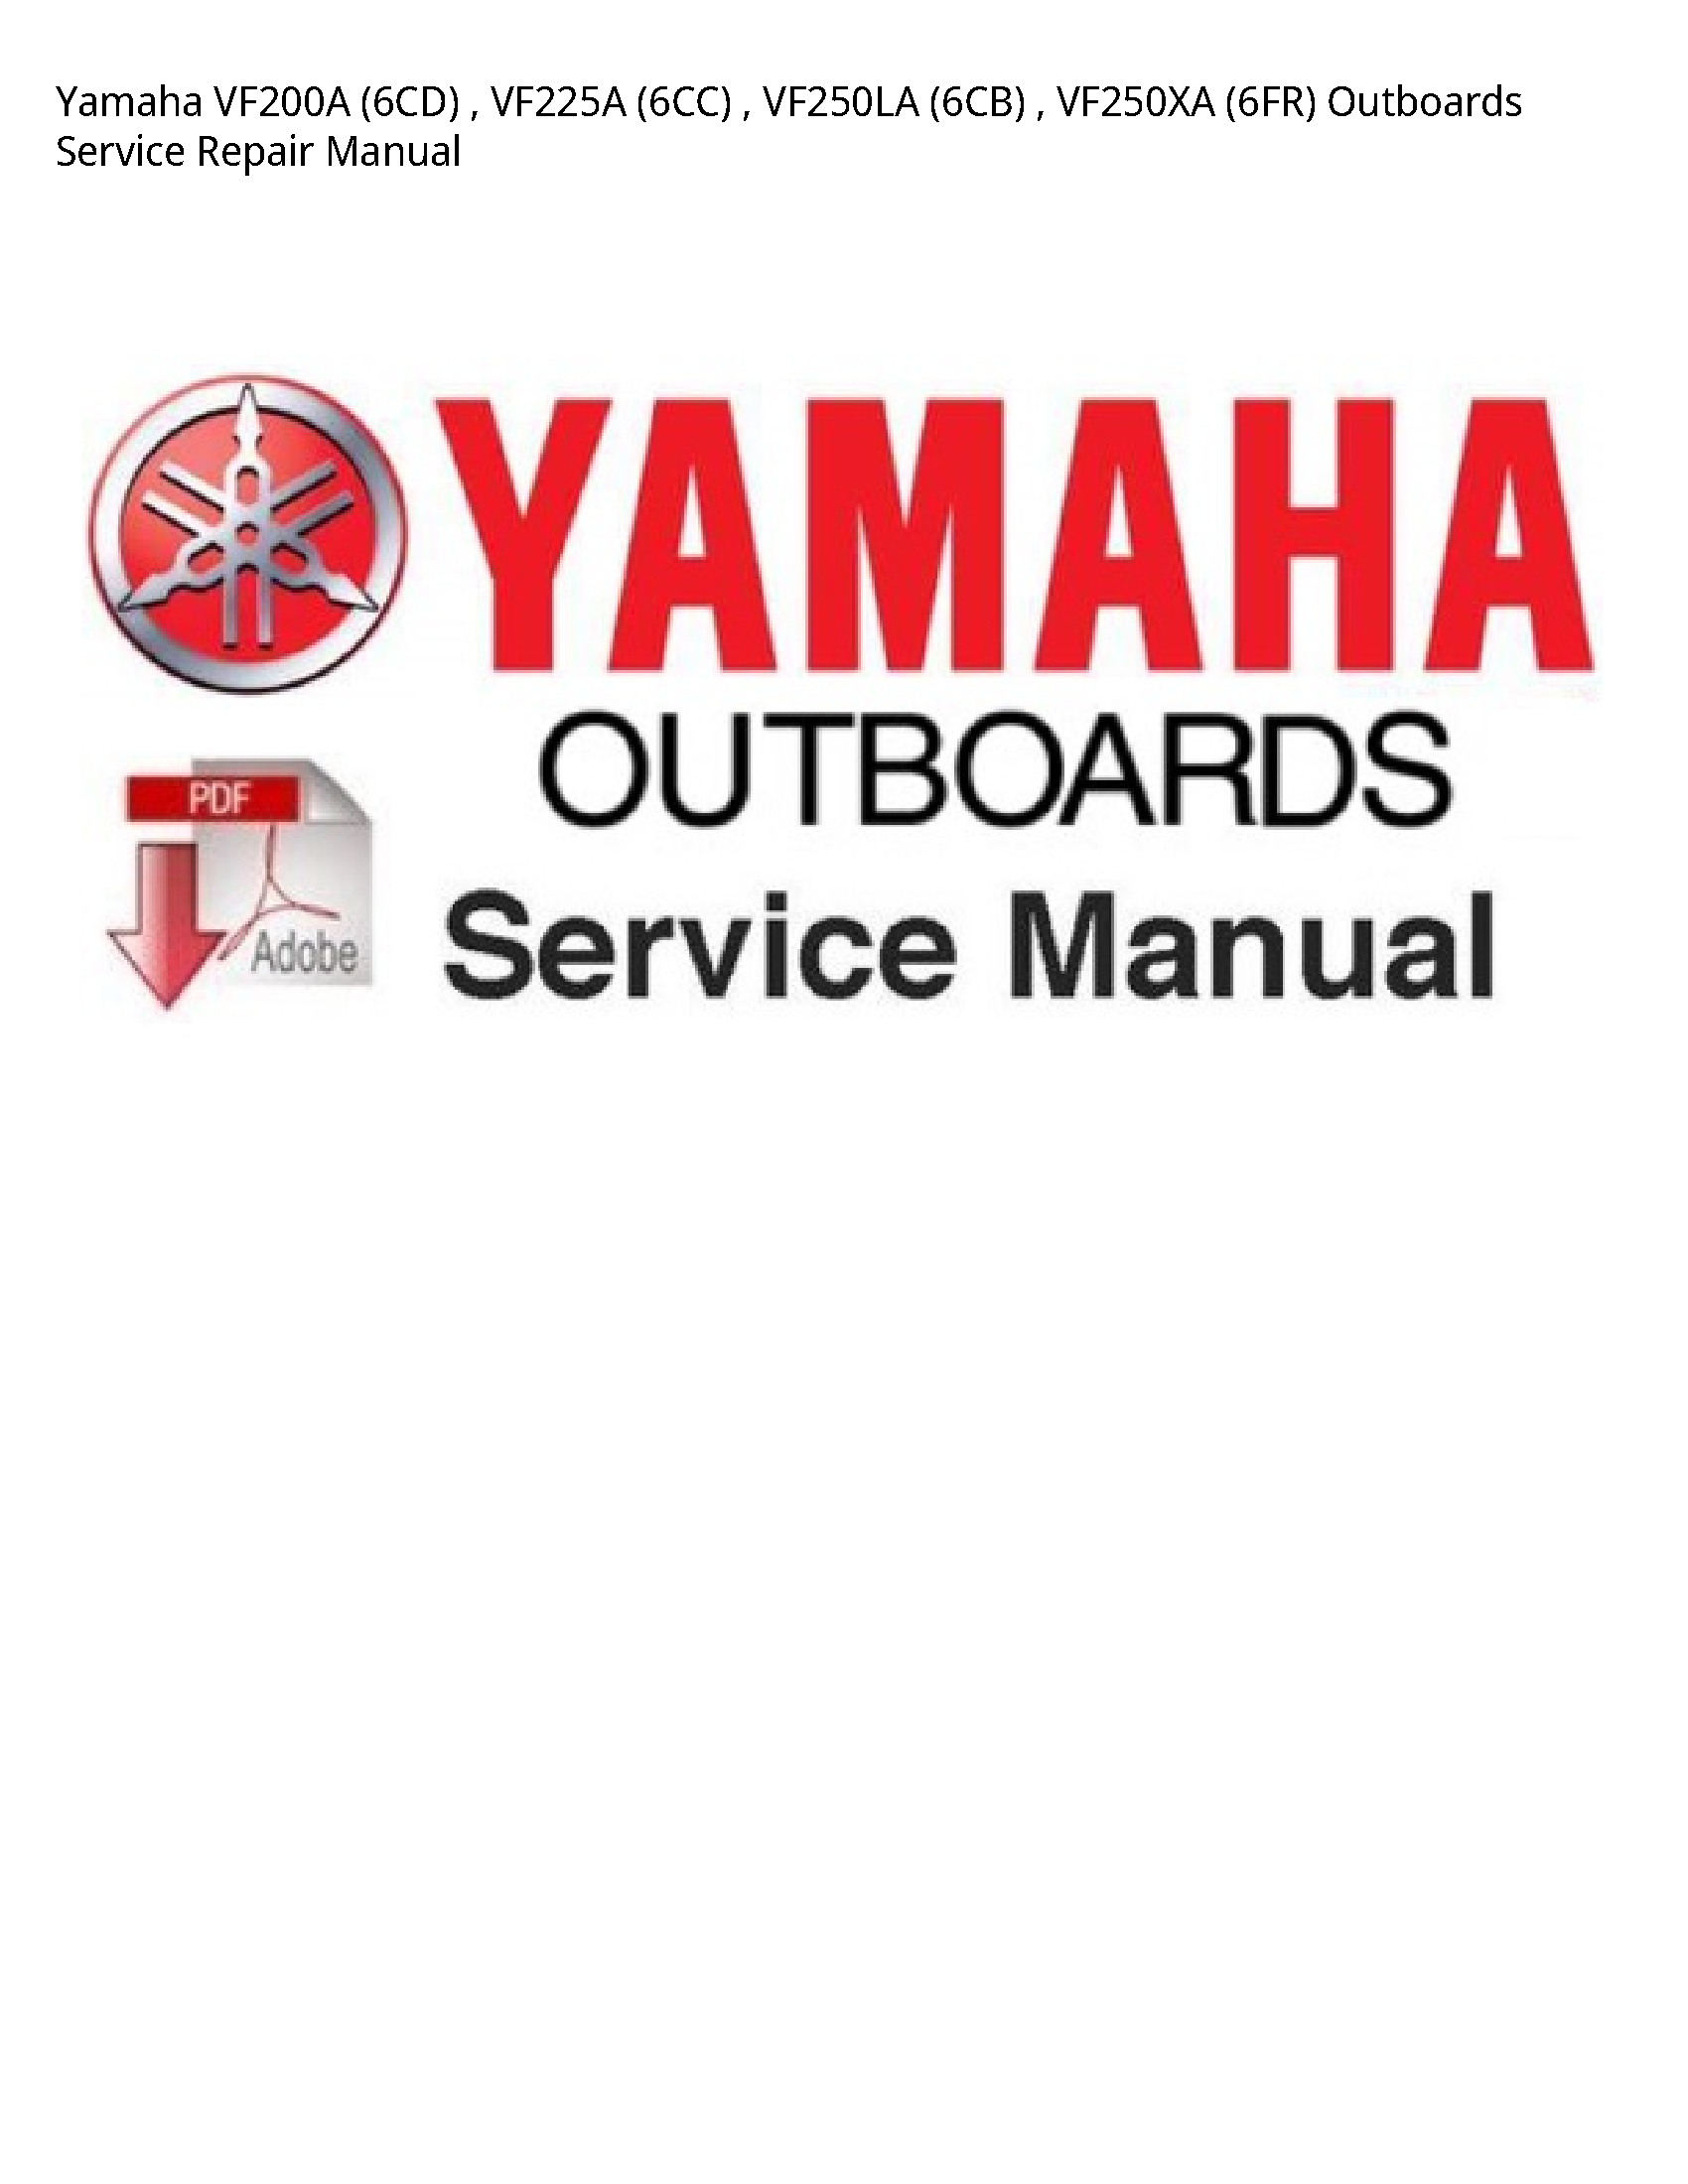 Yamaha VF200A Outboards manual